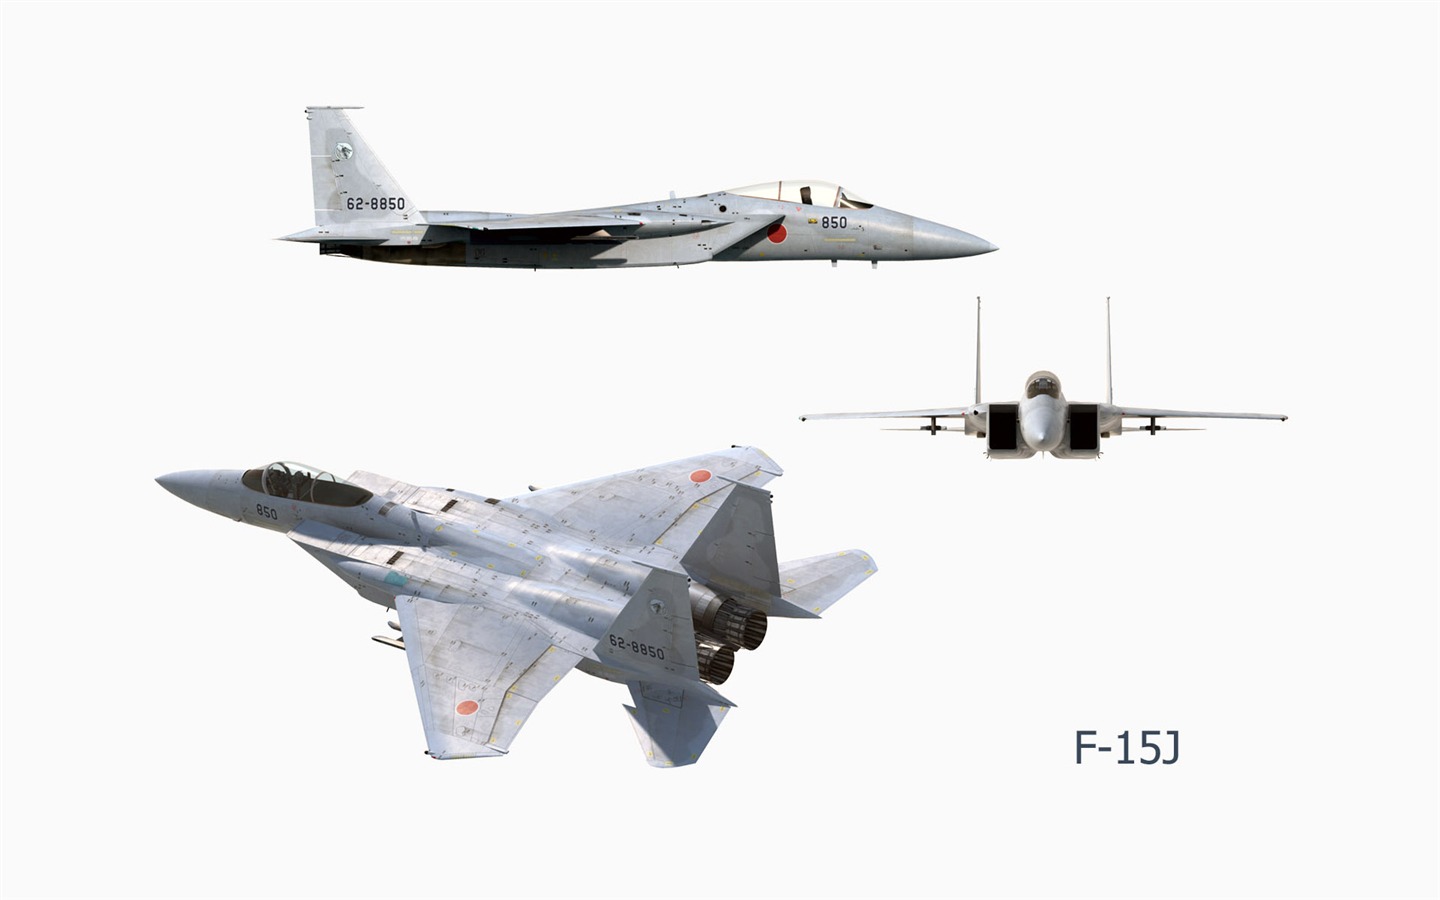 CG wallpaper military aircraft #22 - 1440x900